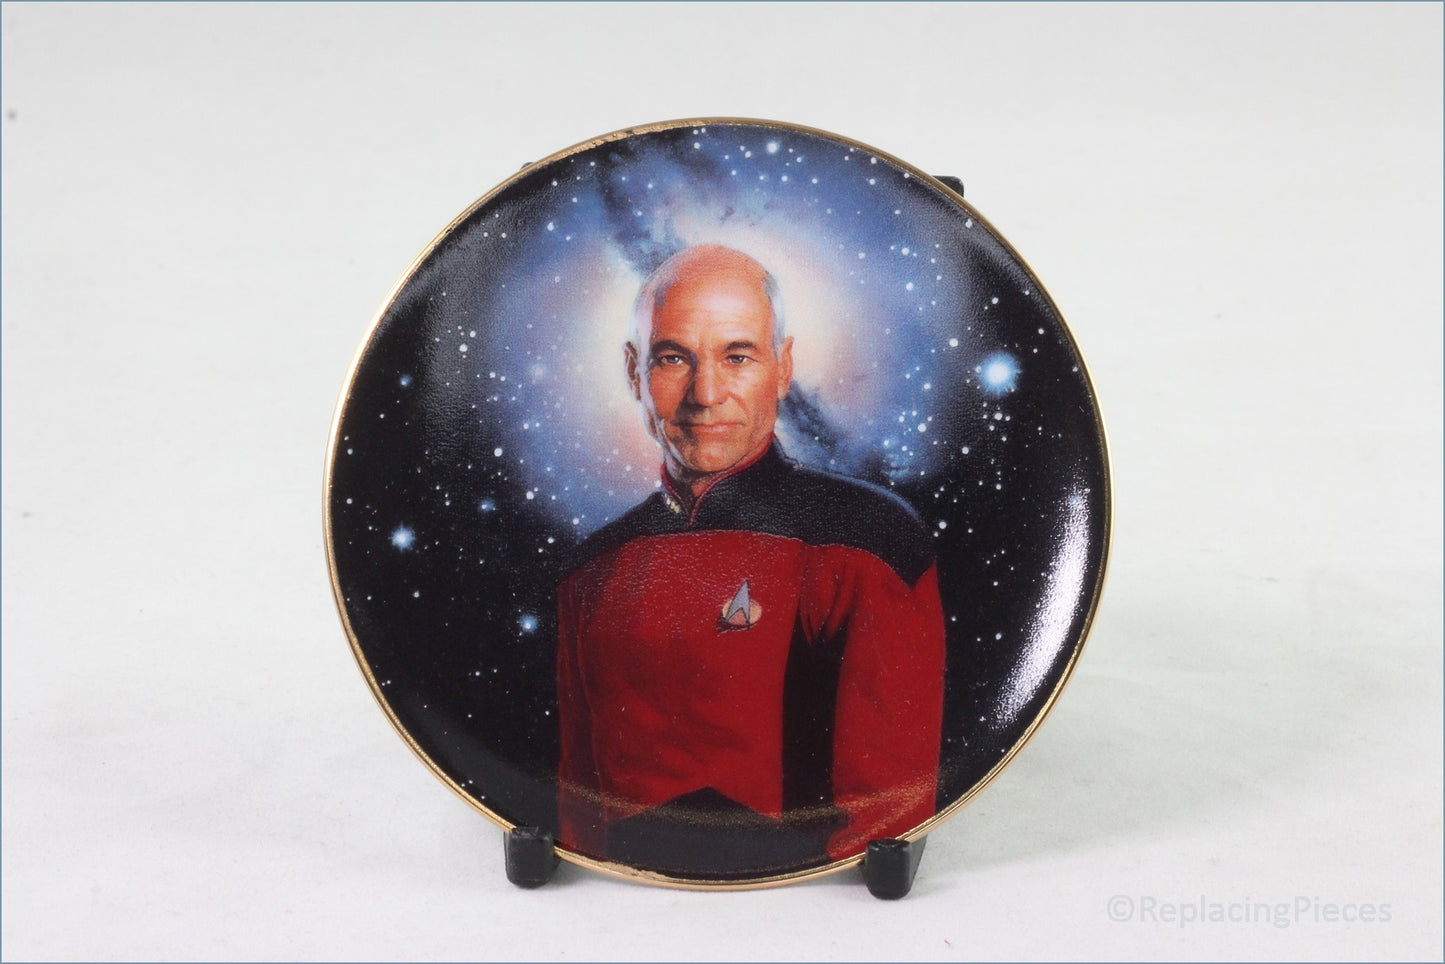 The Hamilton Collection - Star Trek 'The Next Generation' - Captain Jean-Luc Picard